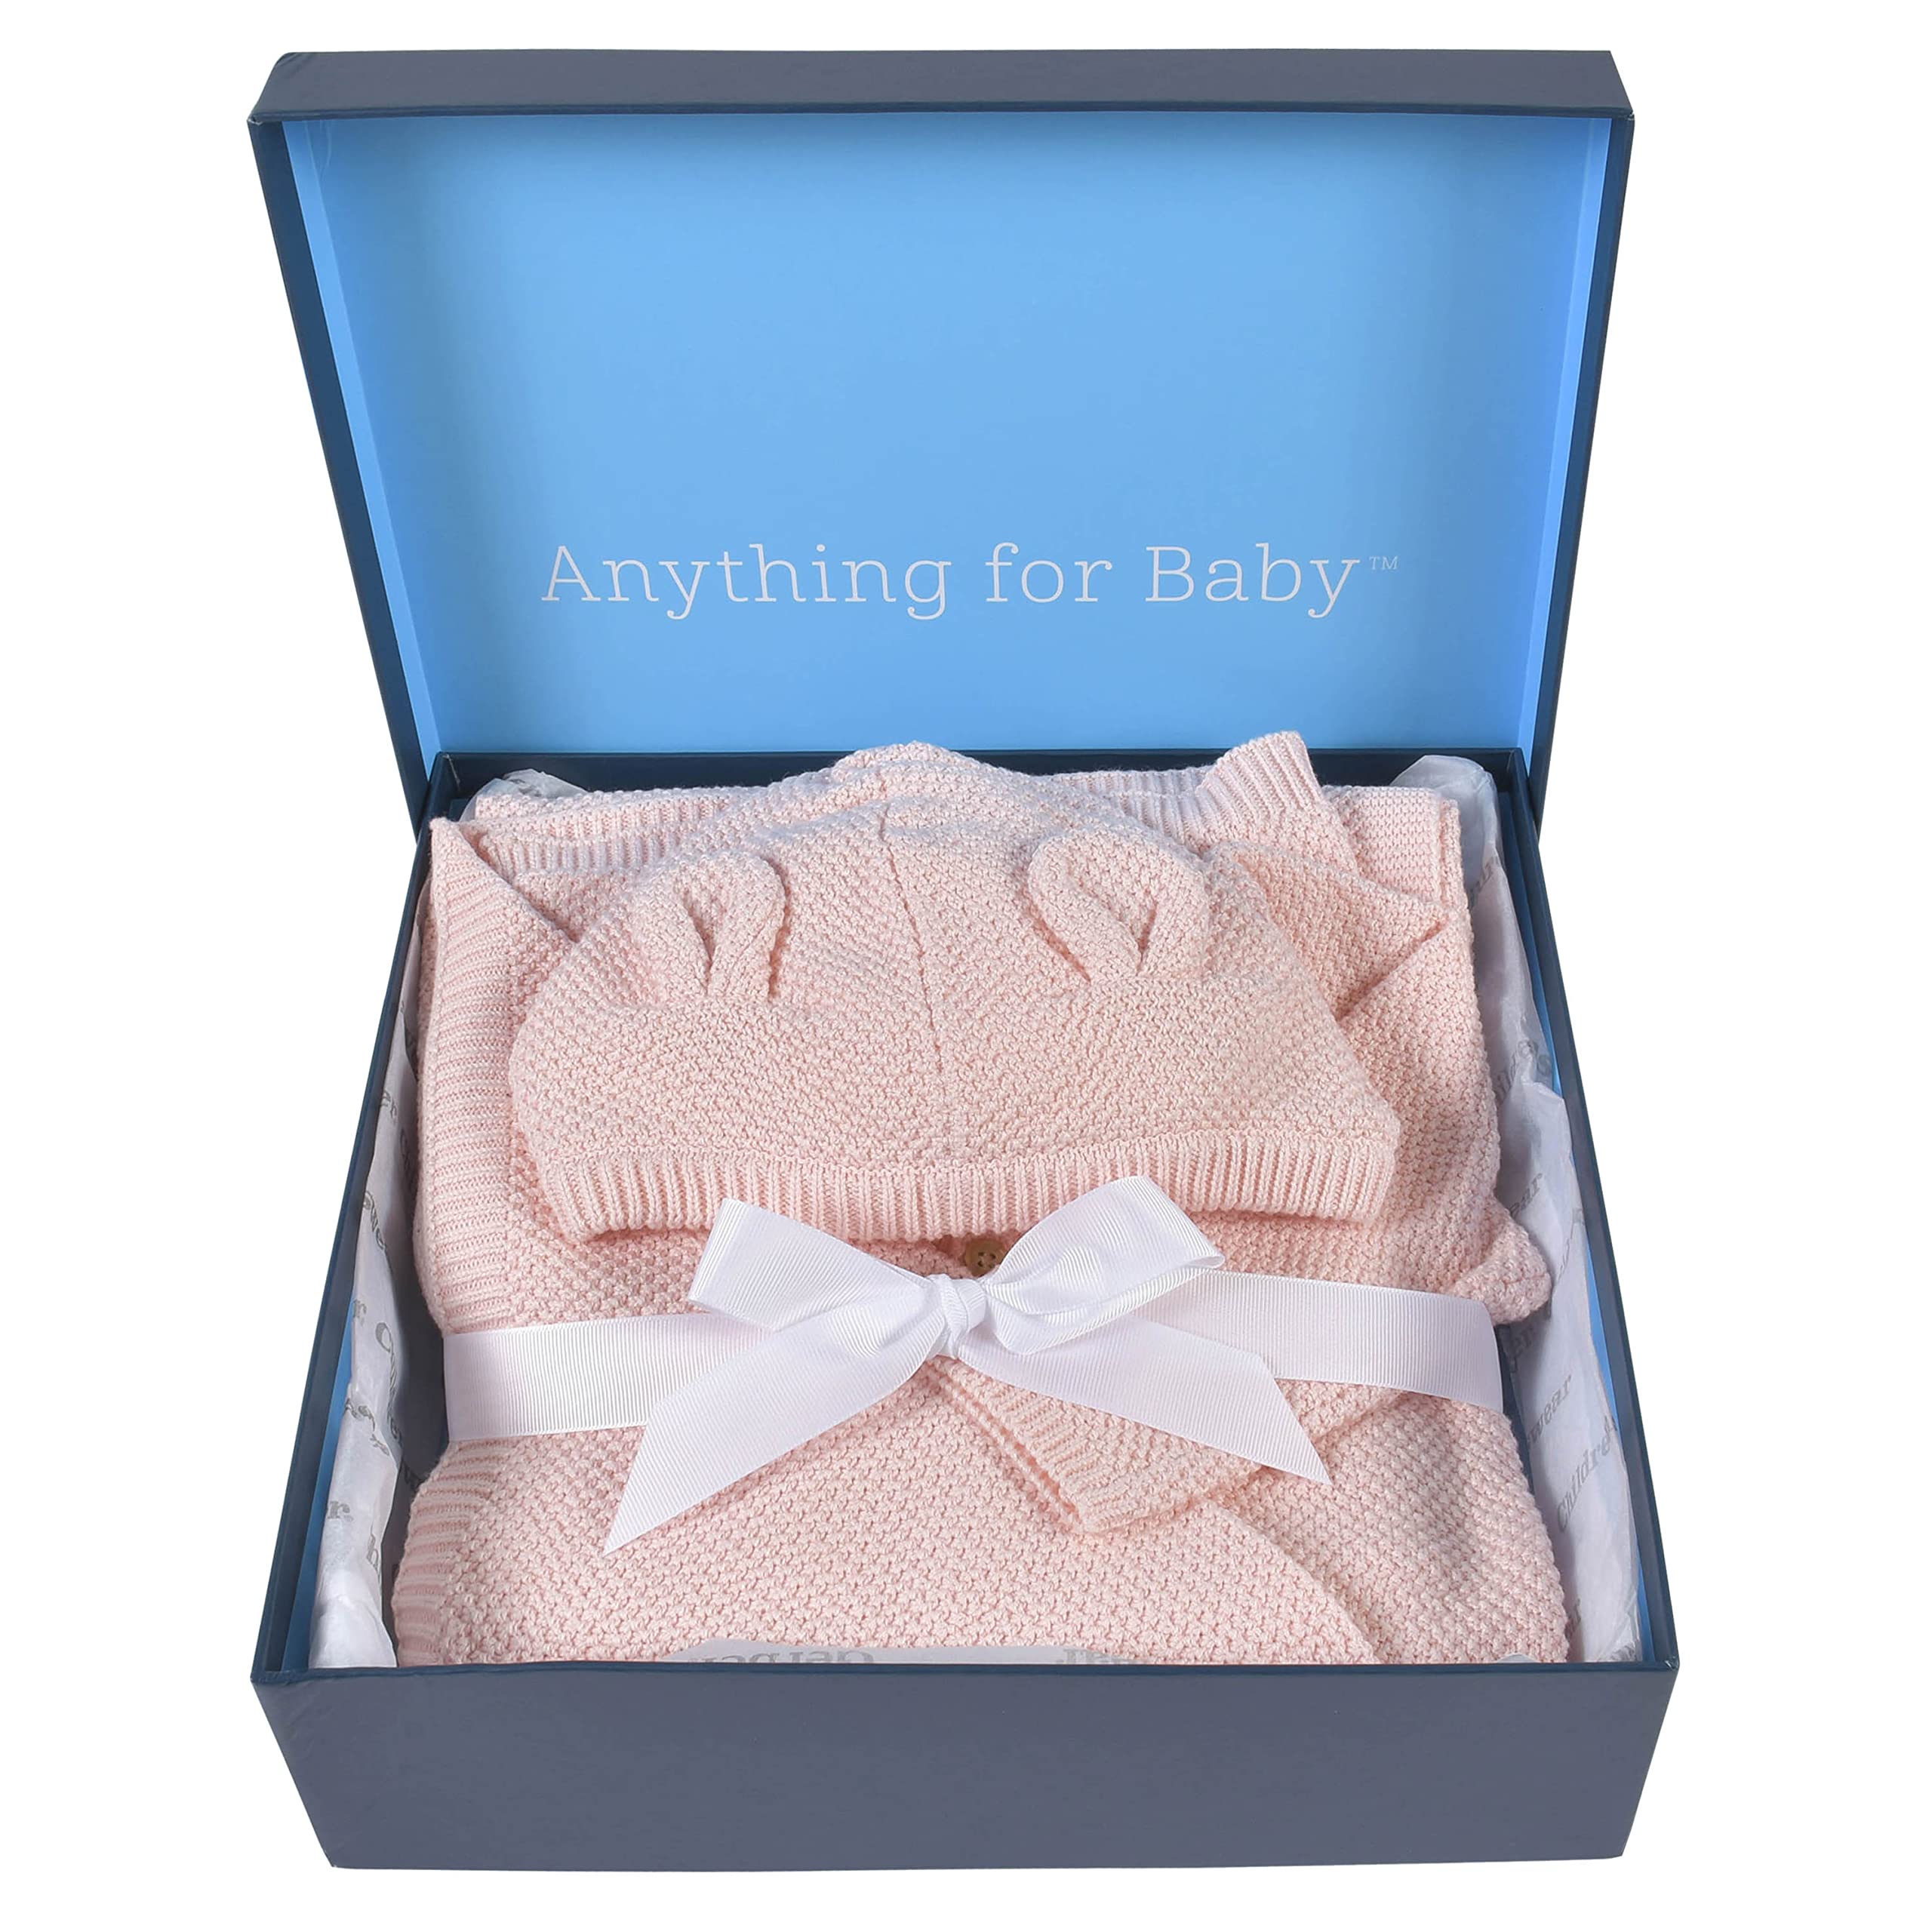 Gerber Unisex Baby 3-Piece Knit Clothing Gift Set Pink Newborn